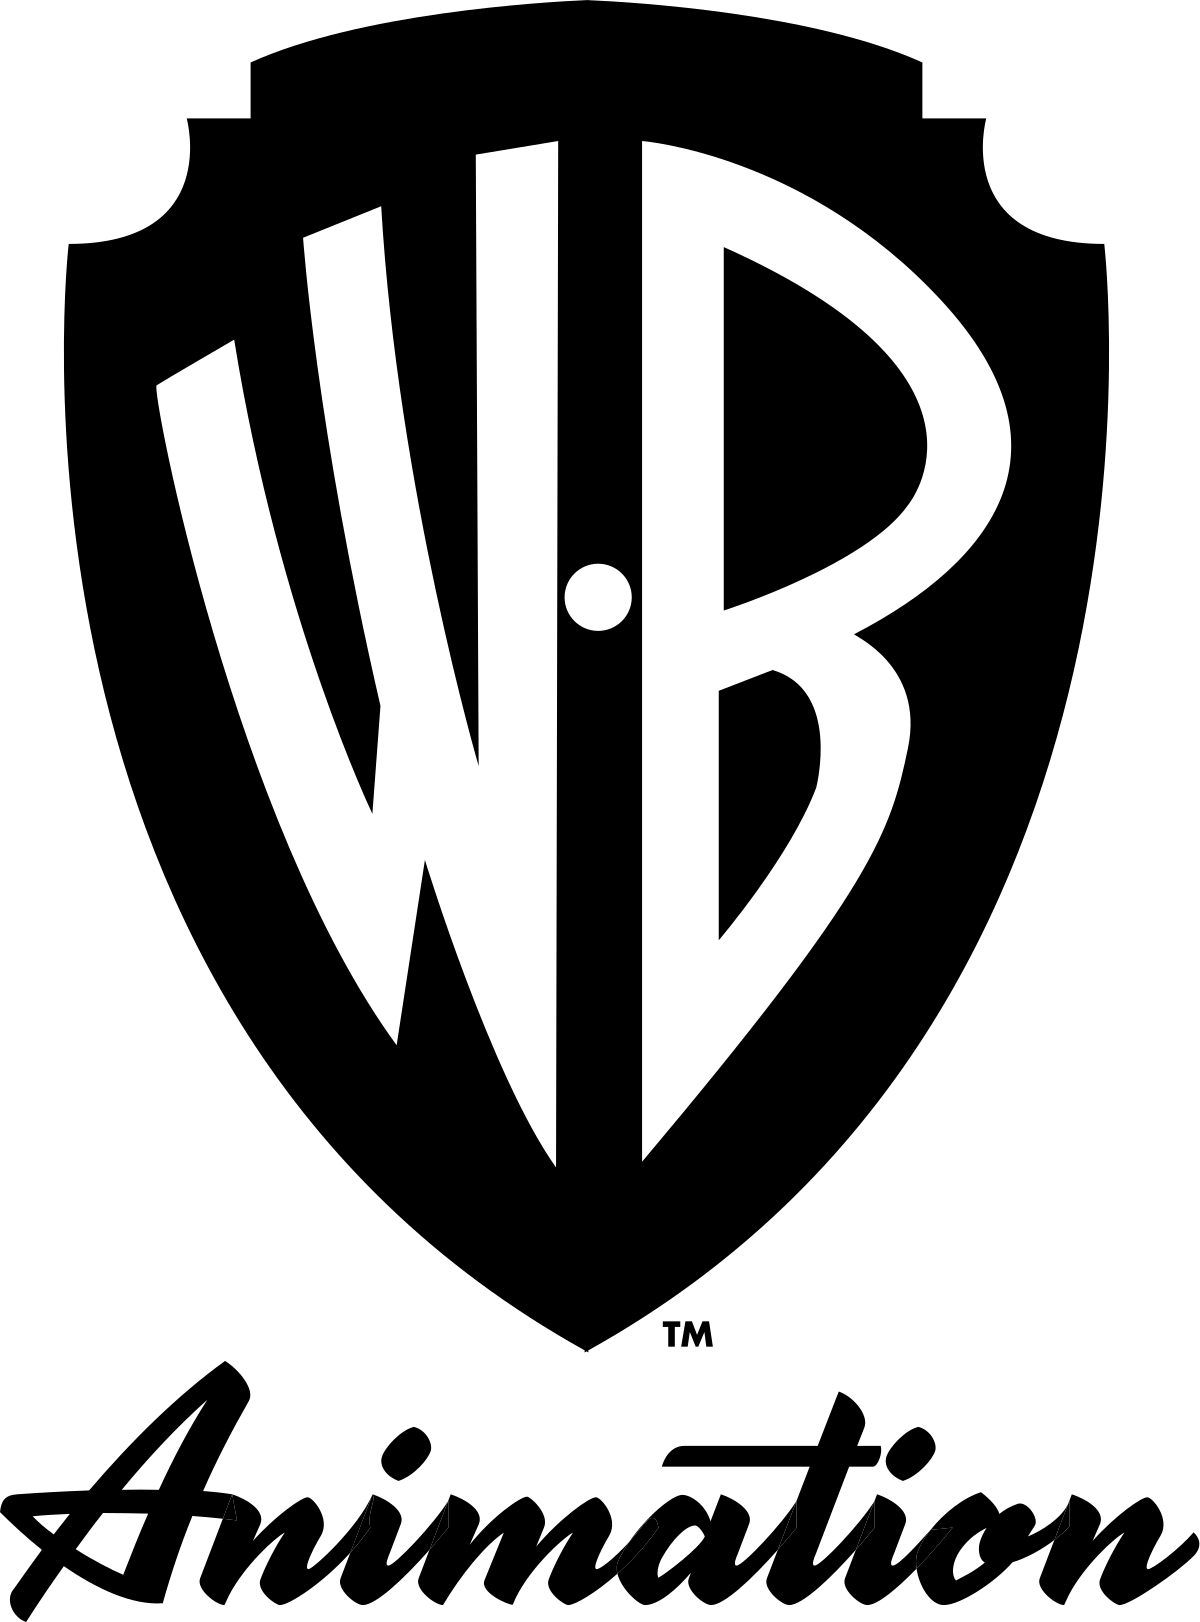 File:Media Markt logo.svg - Wikipedia